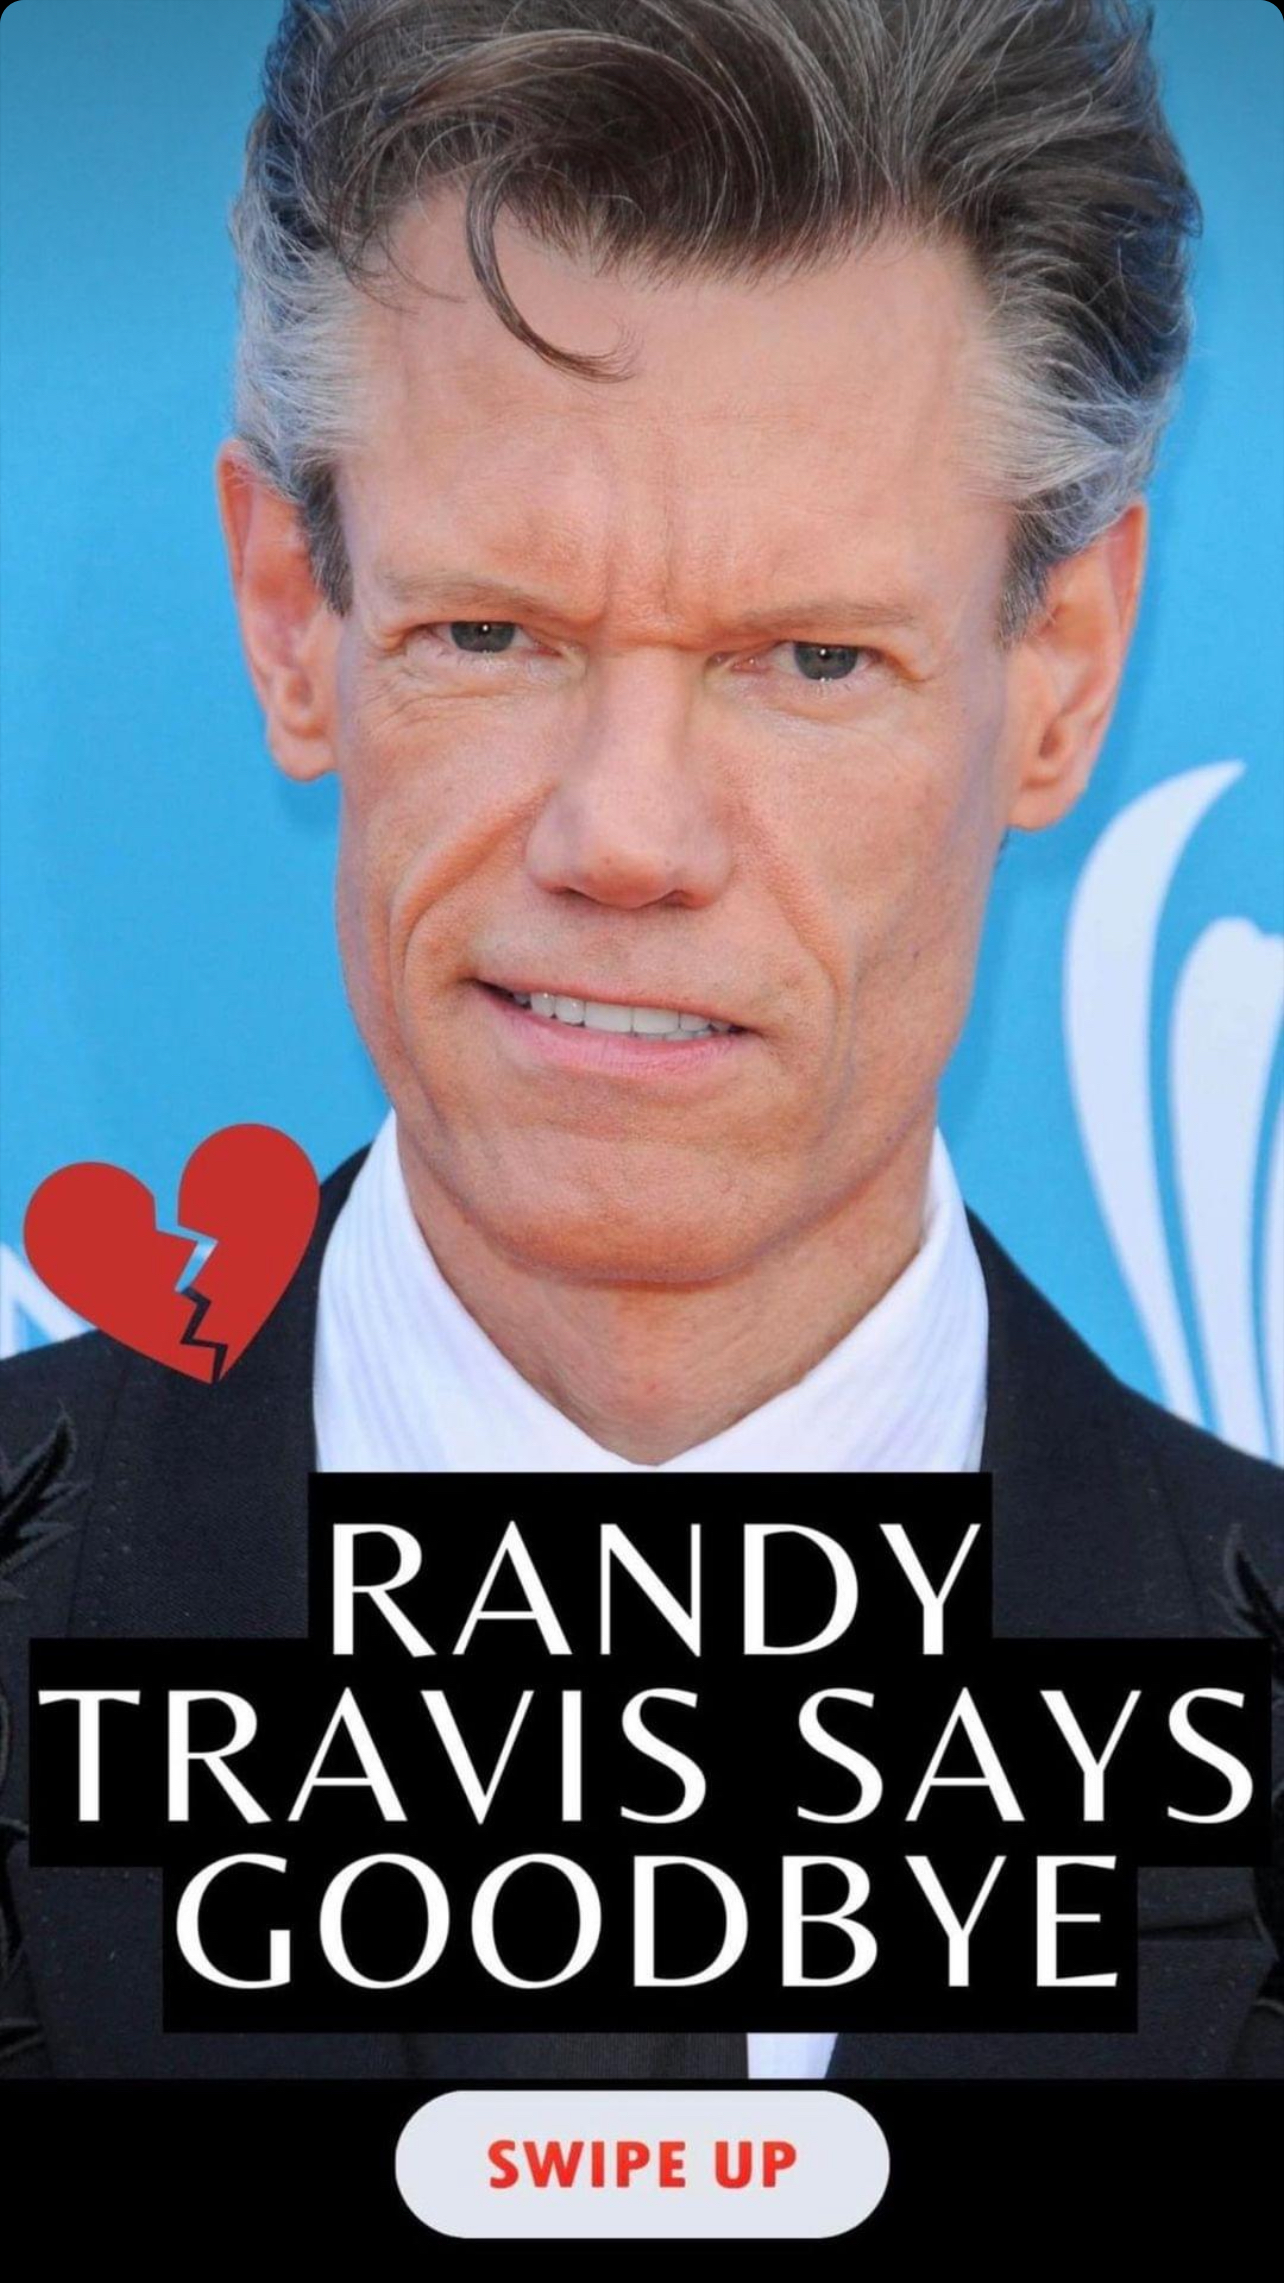 Randy Travis Bids Farewell to Beloved Friend in Emotional Facebook Post